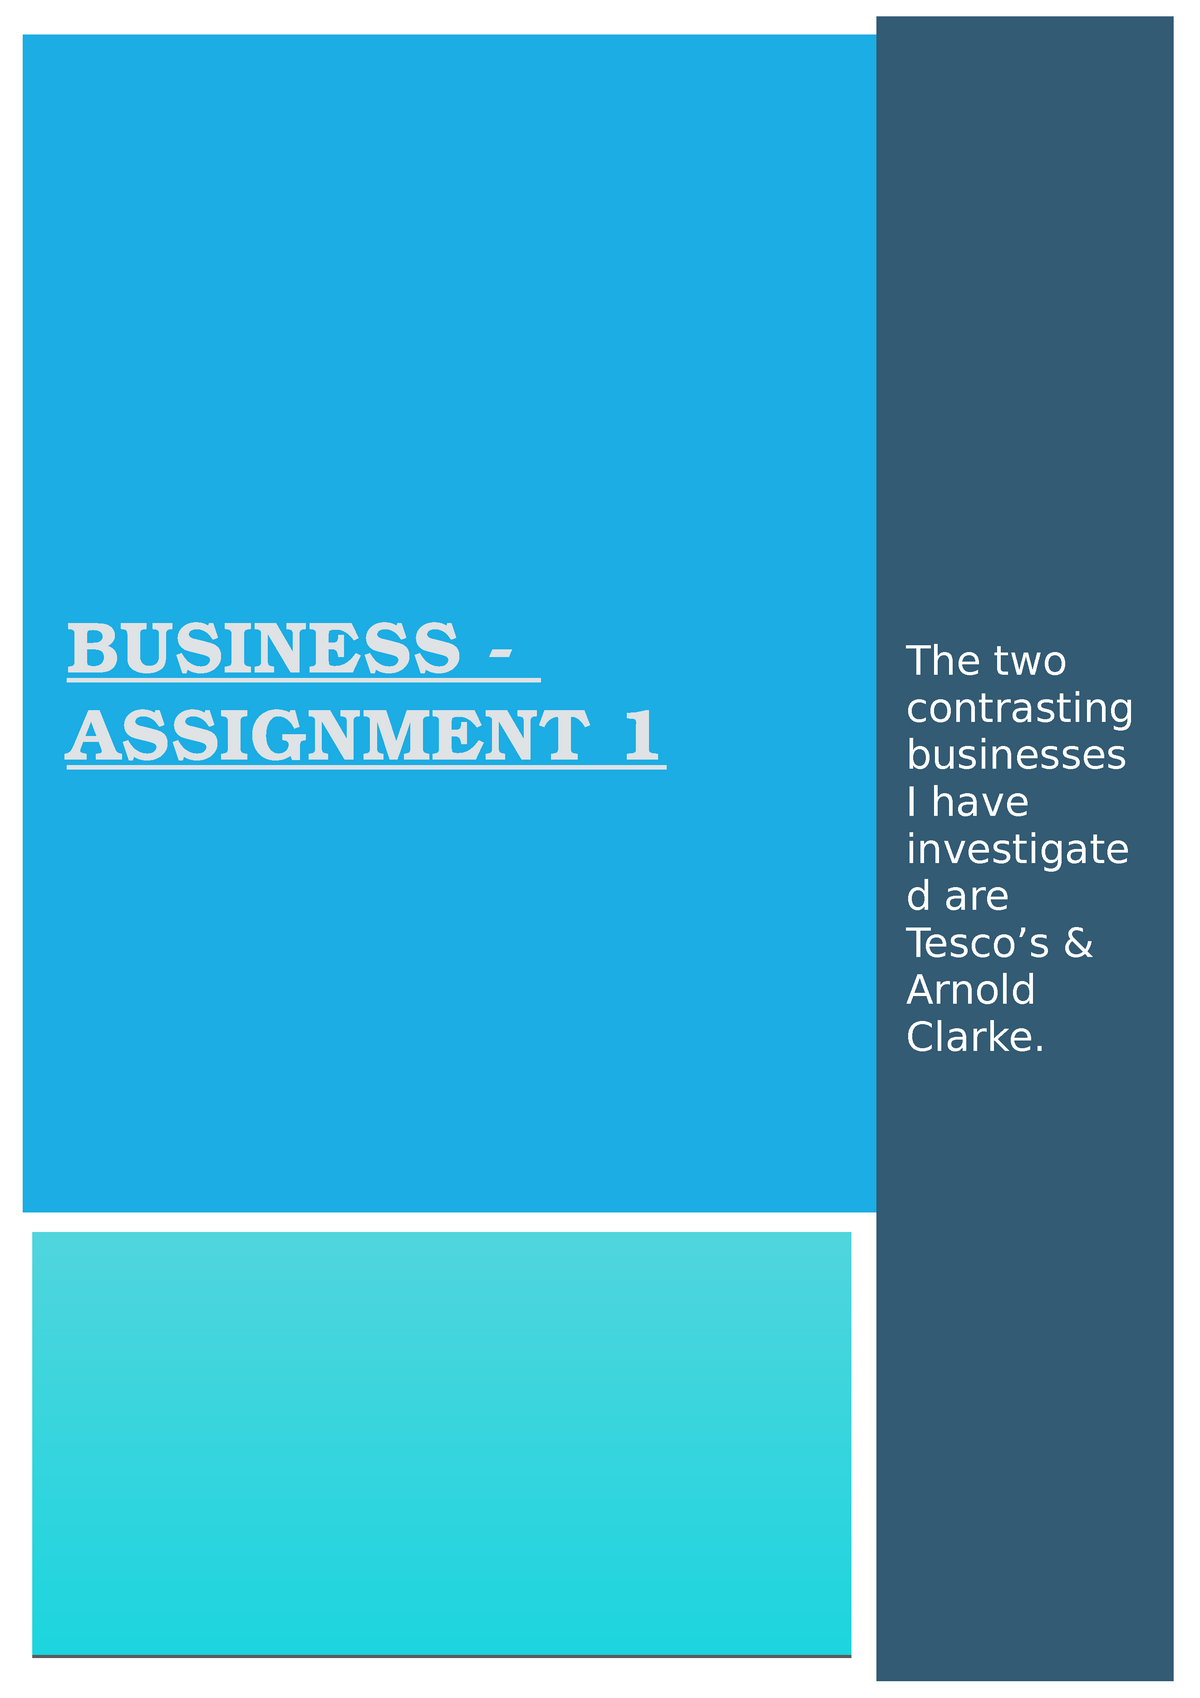 business unit 14 assignment 2